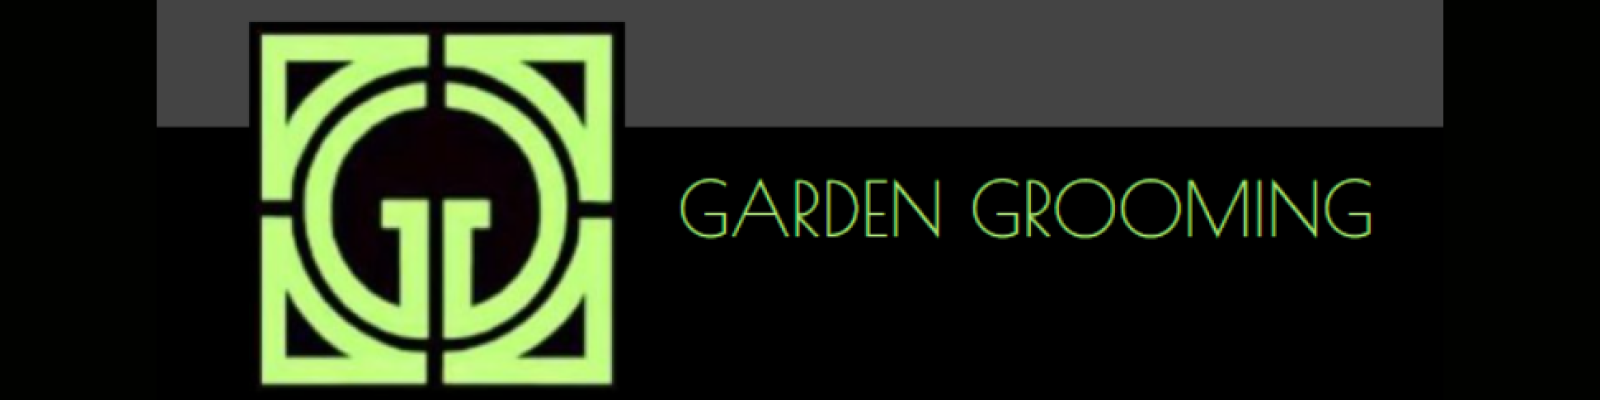 Garden Grooming Logo